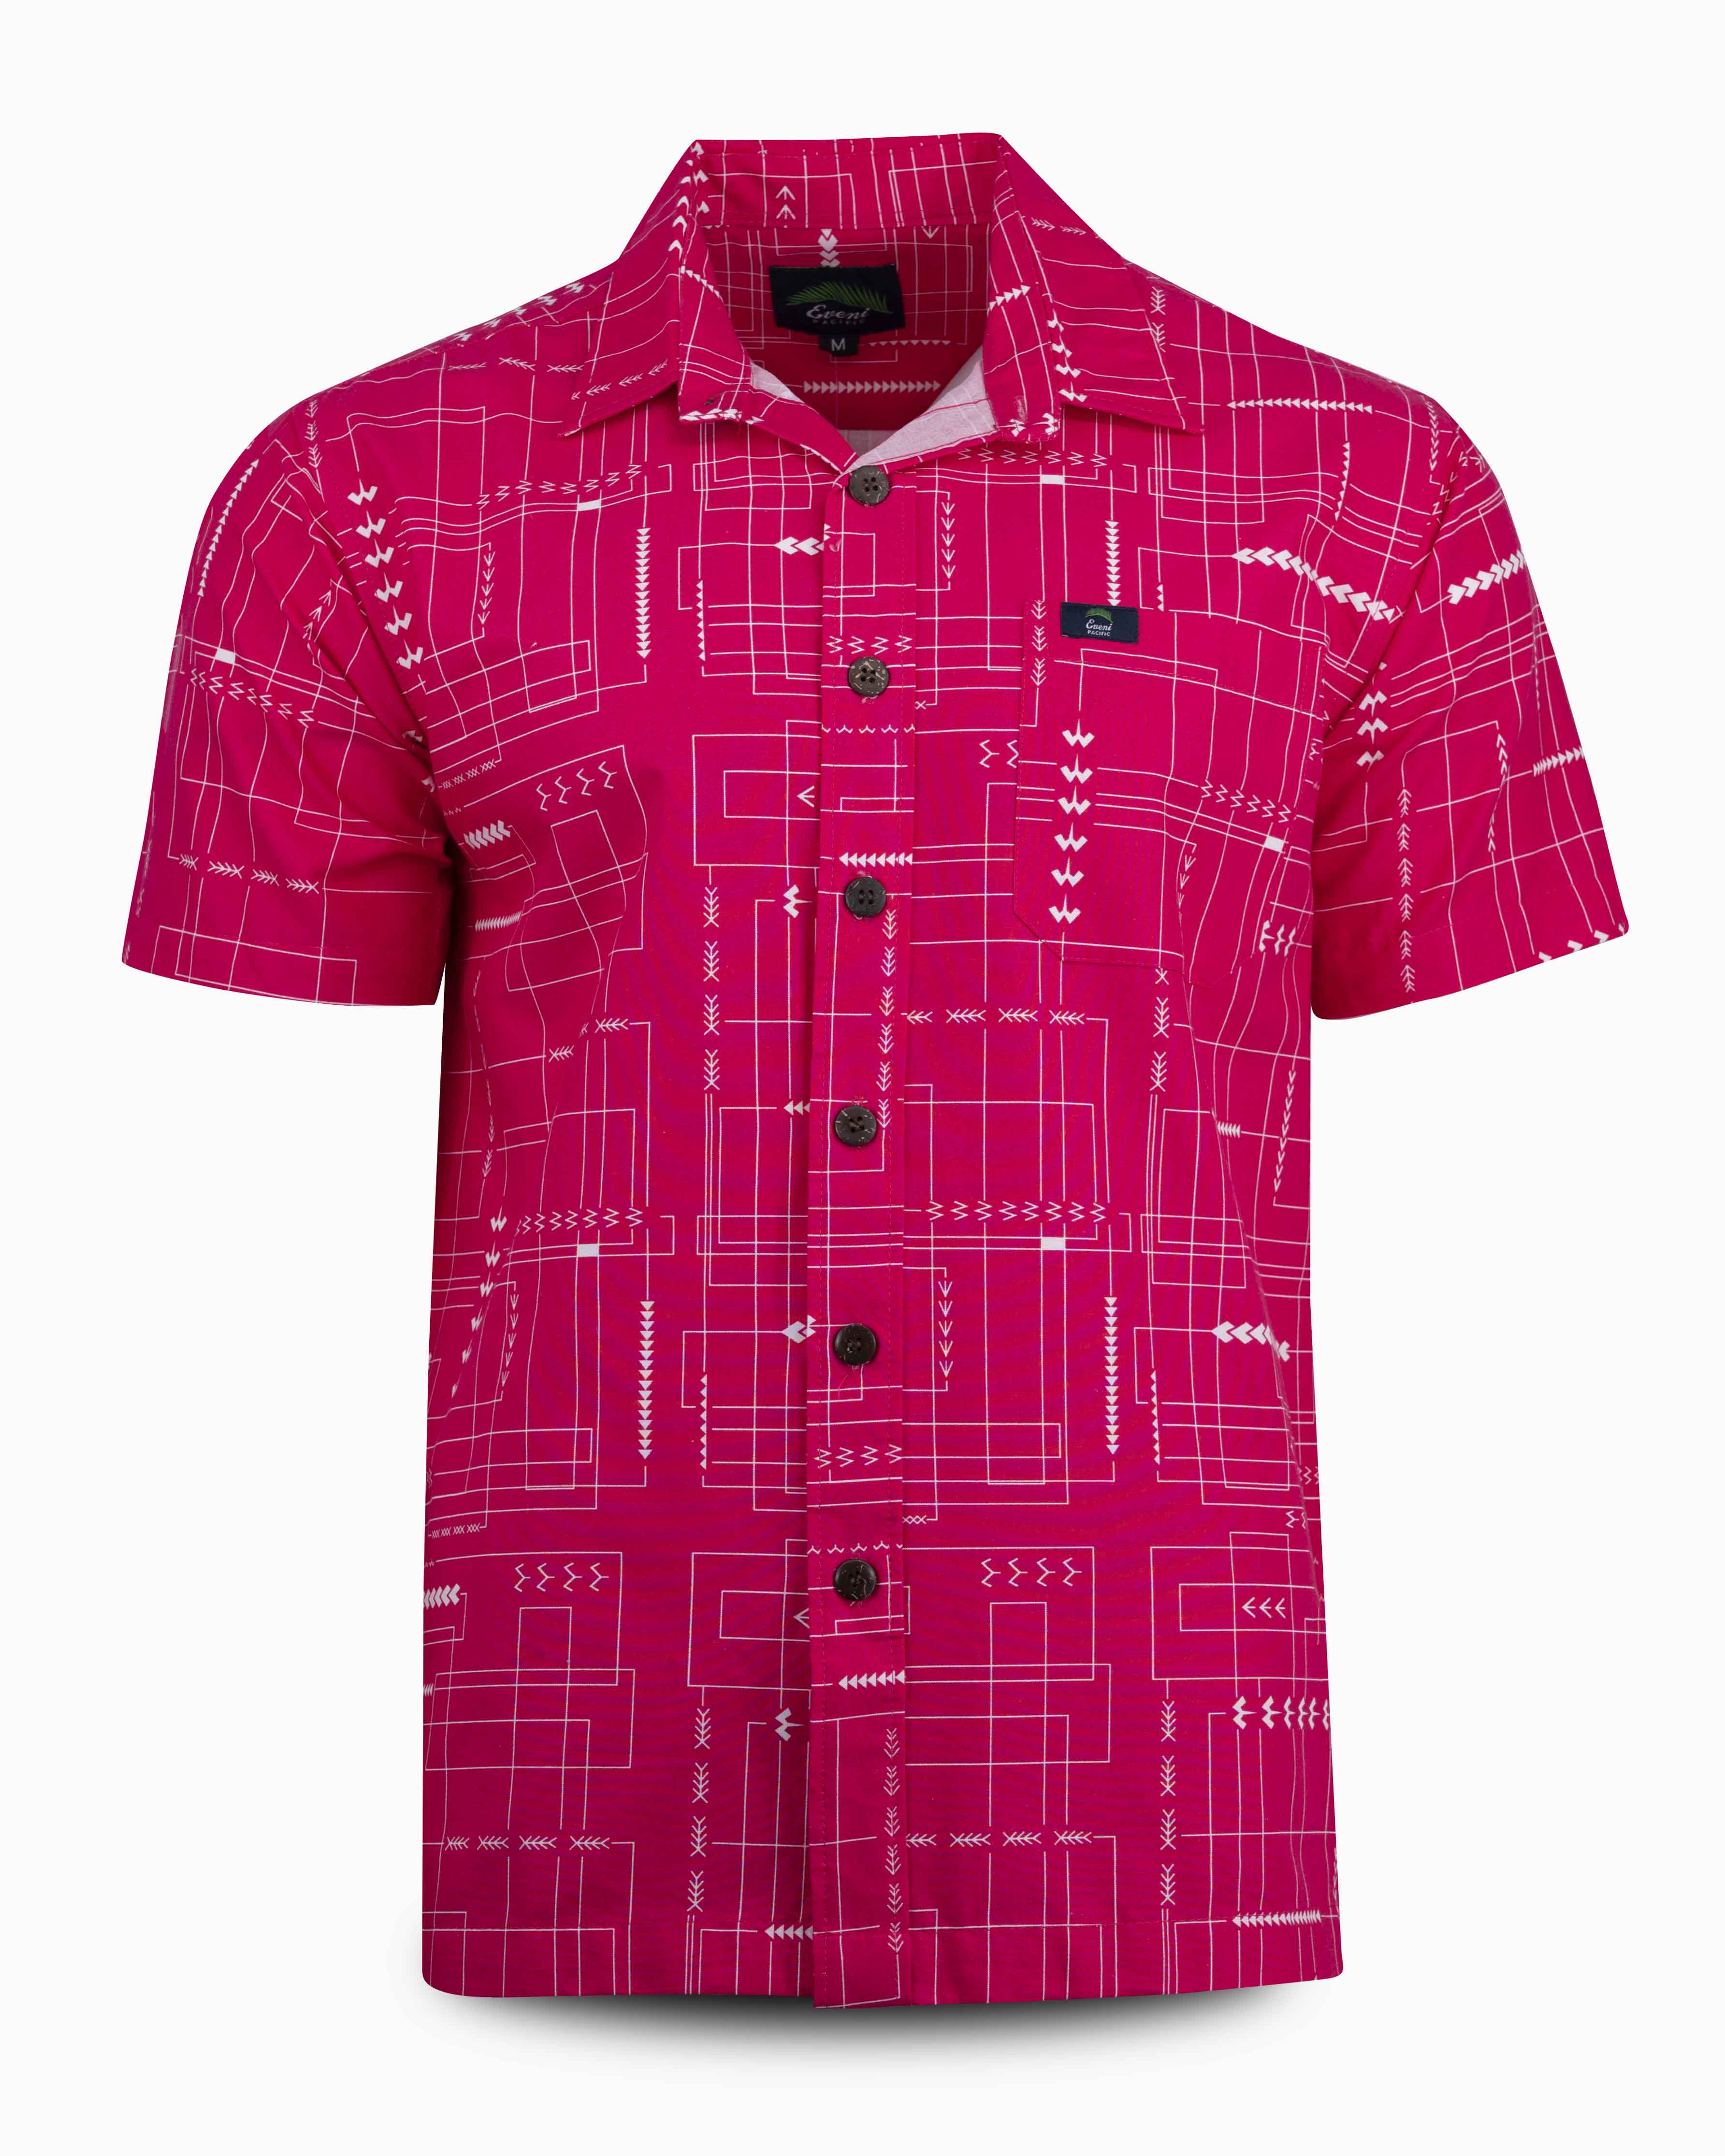 Eveni Pacific Men's Classic Shirt - ROB PINK